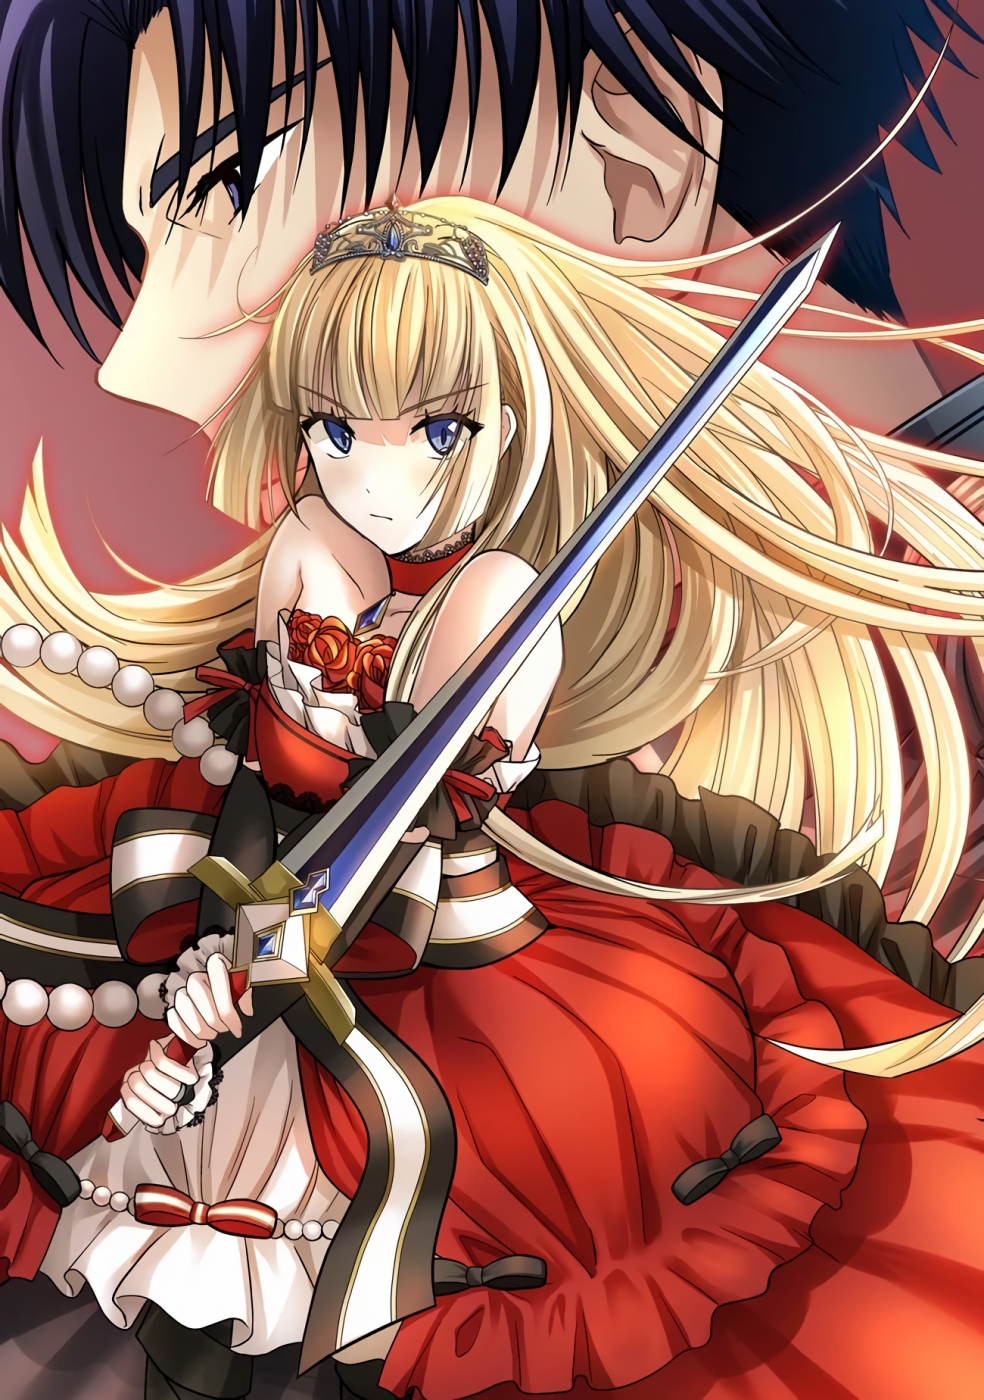 Sword, Tiara and High Heels Manga